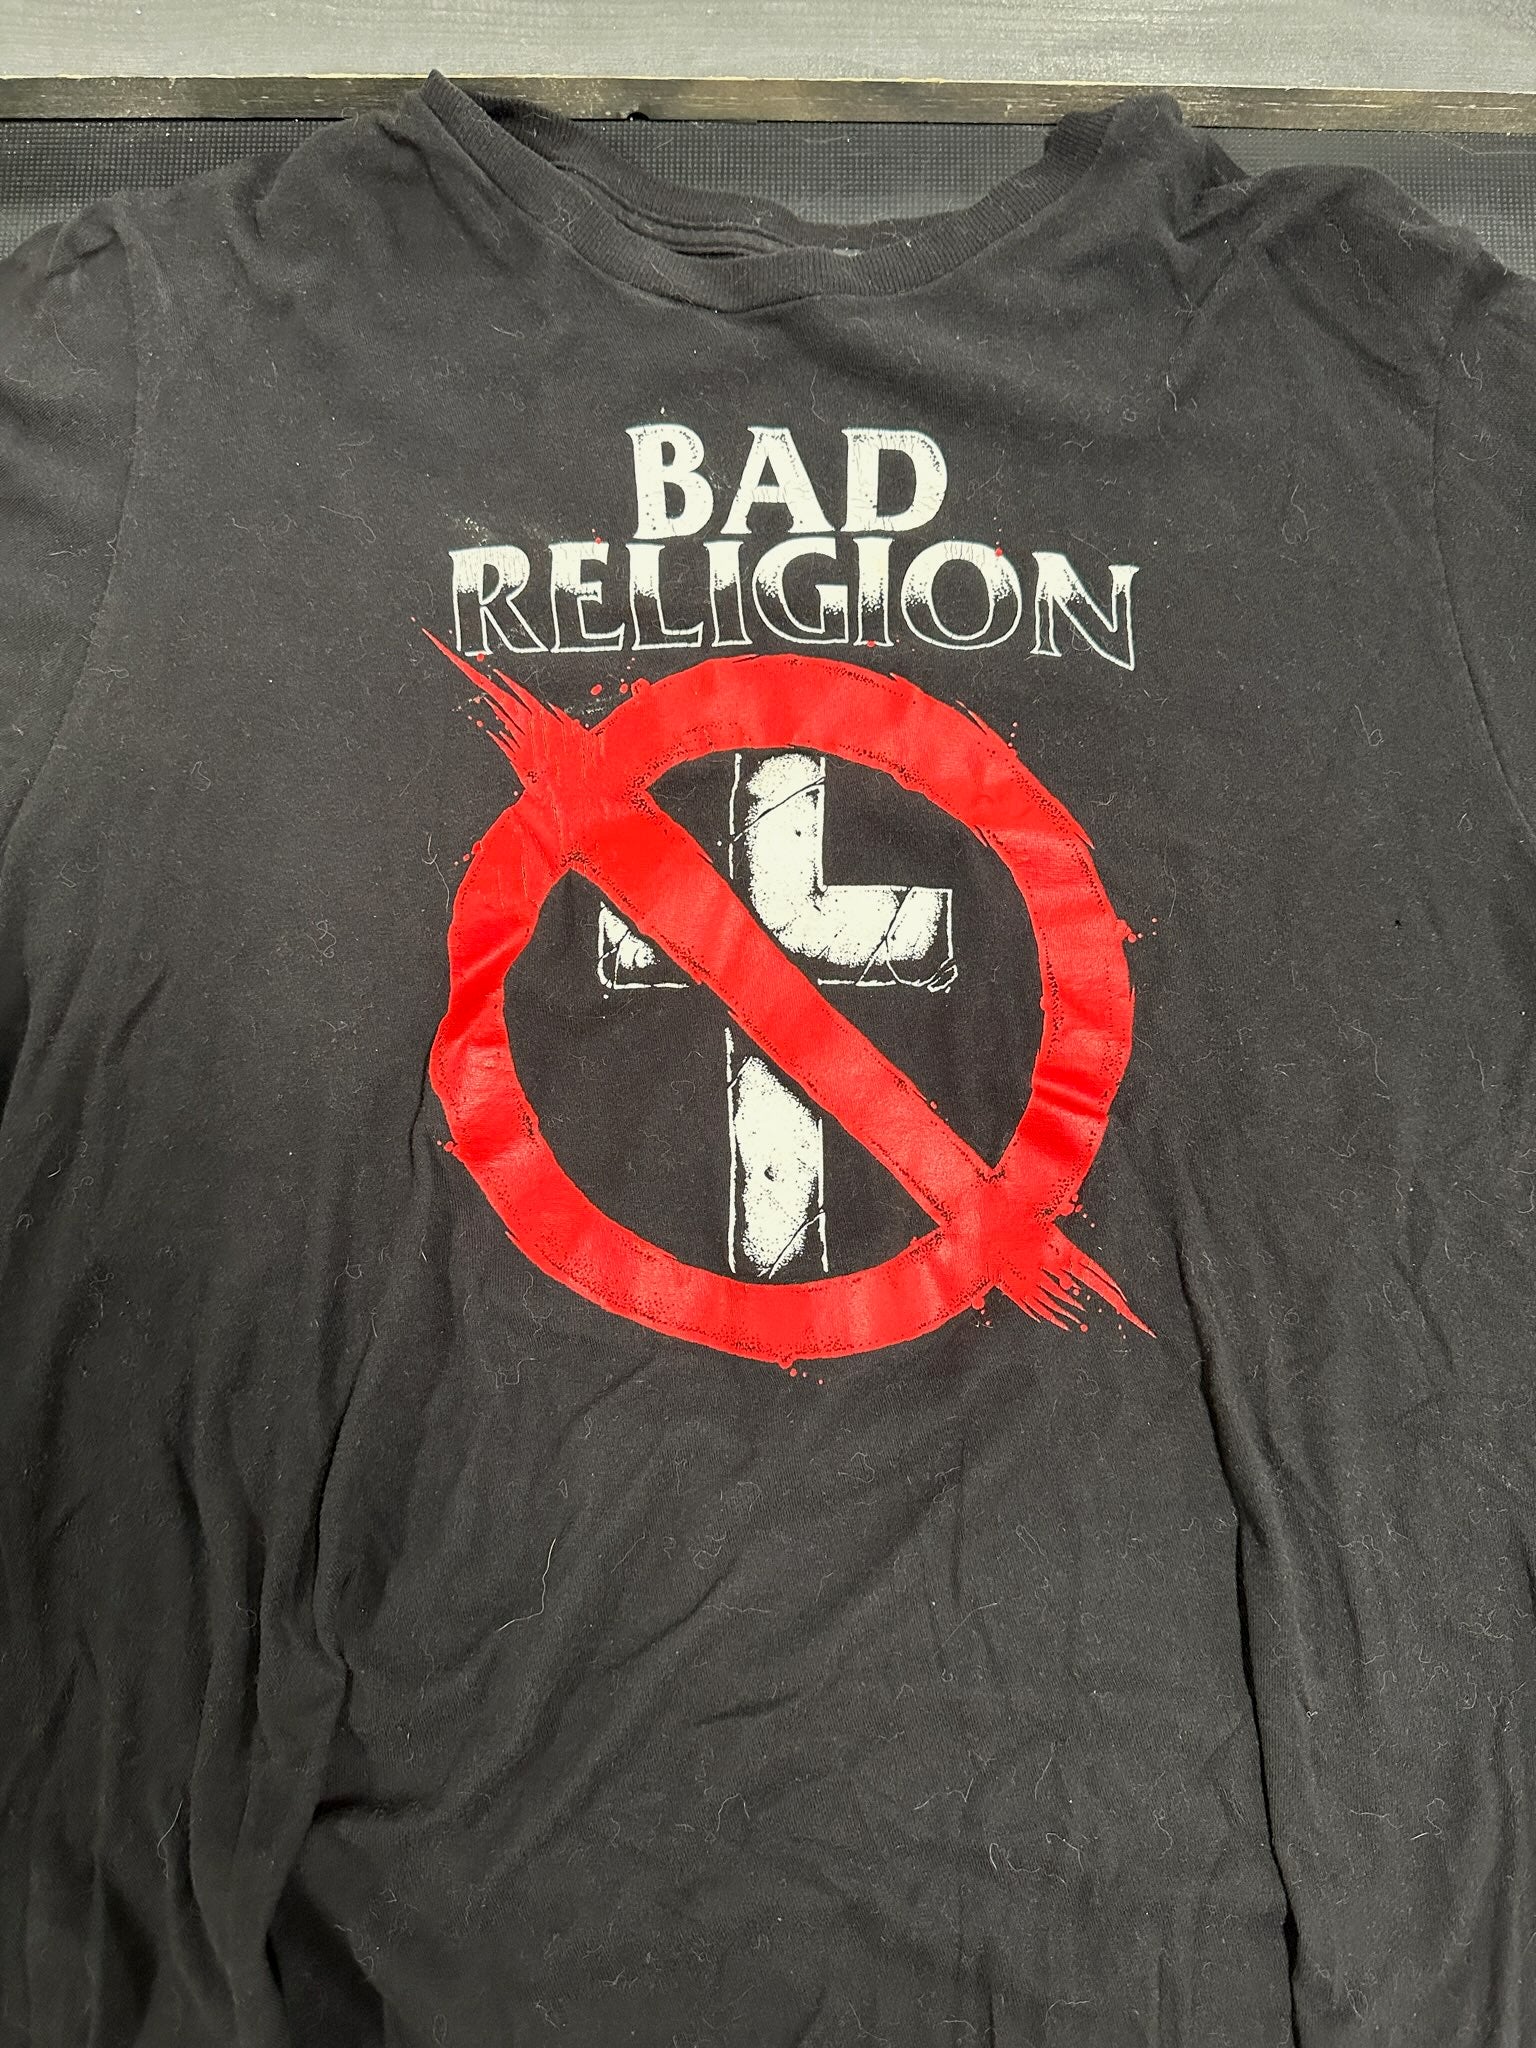 Bad Religion No Religion T-Shirt, Blk, L